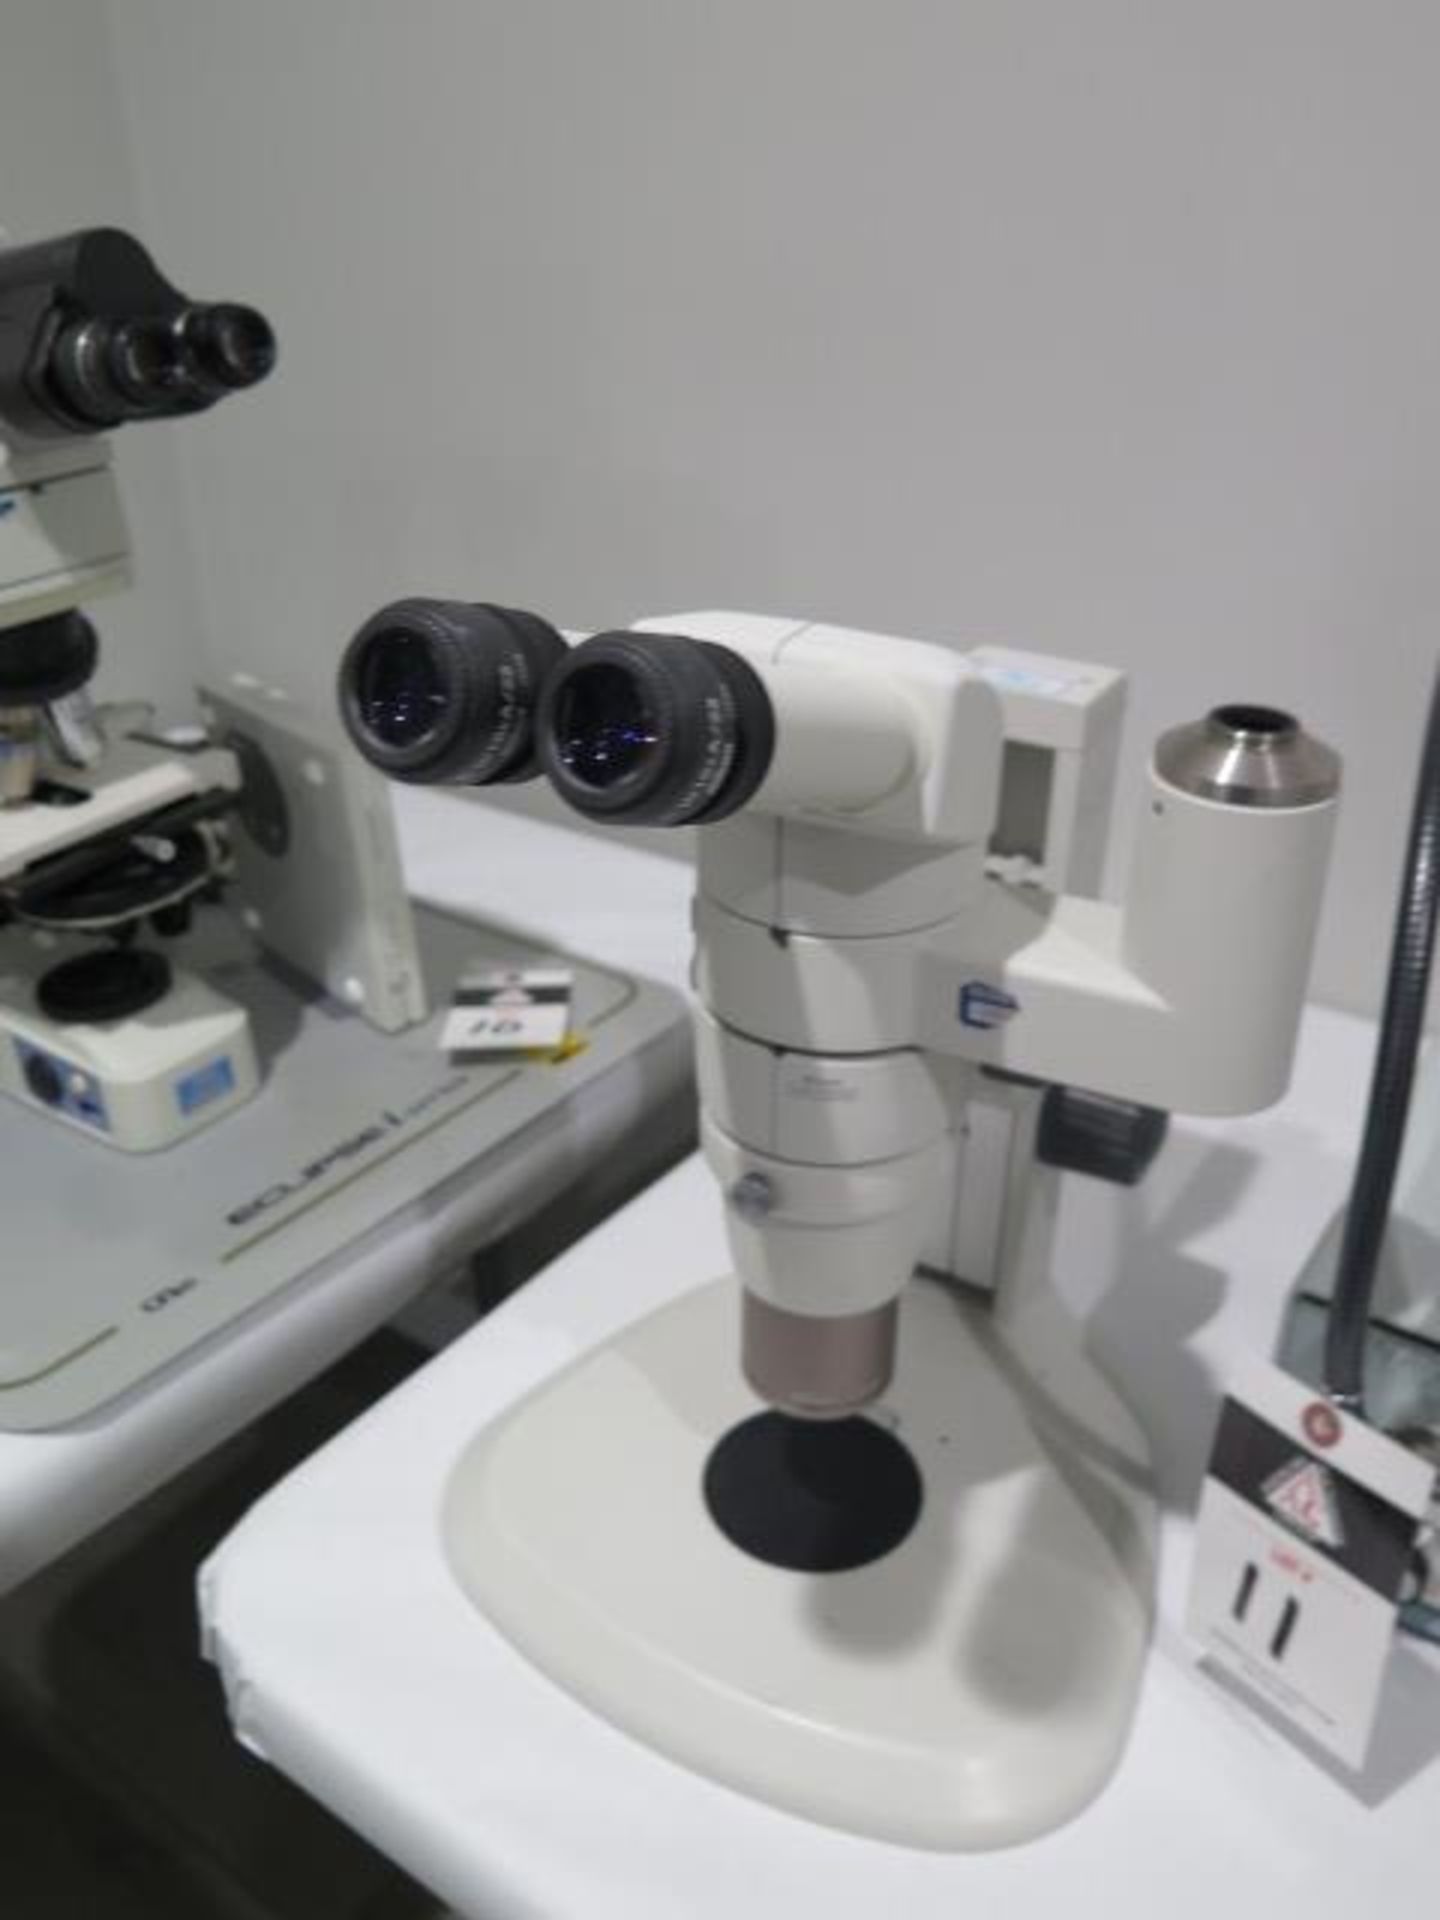 Nikon SMZ800 Monocular Microscope w/ Phototube Video Splitter Port (NO CAMERA), A.G. Heinze Dyna - Image 3 of 10